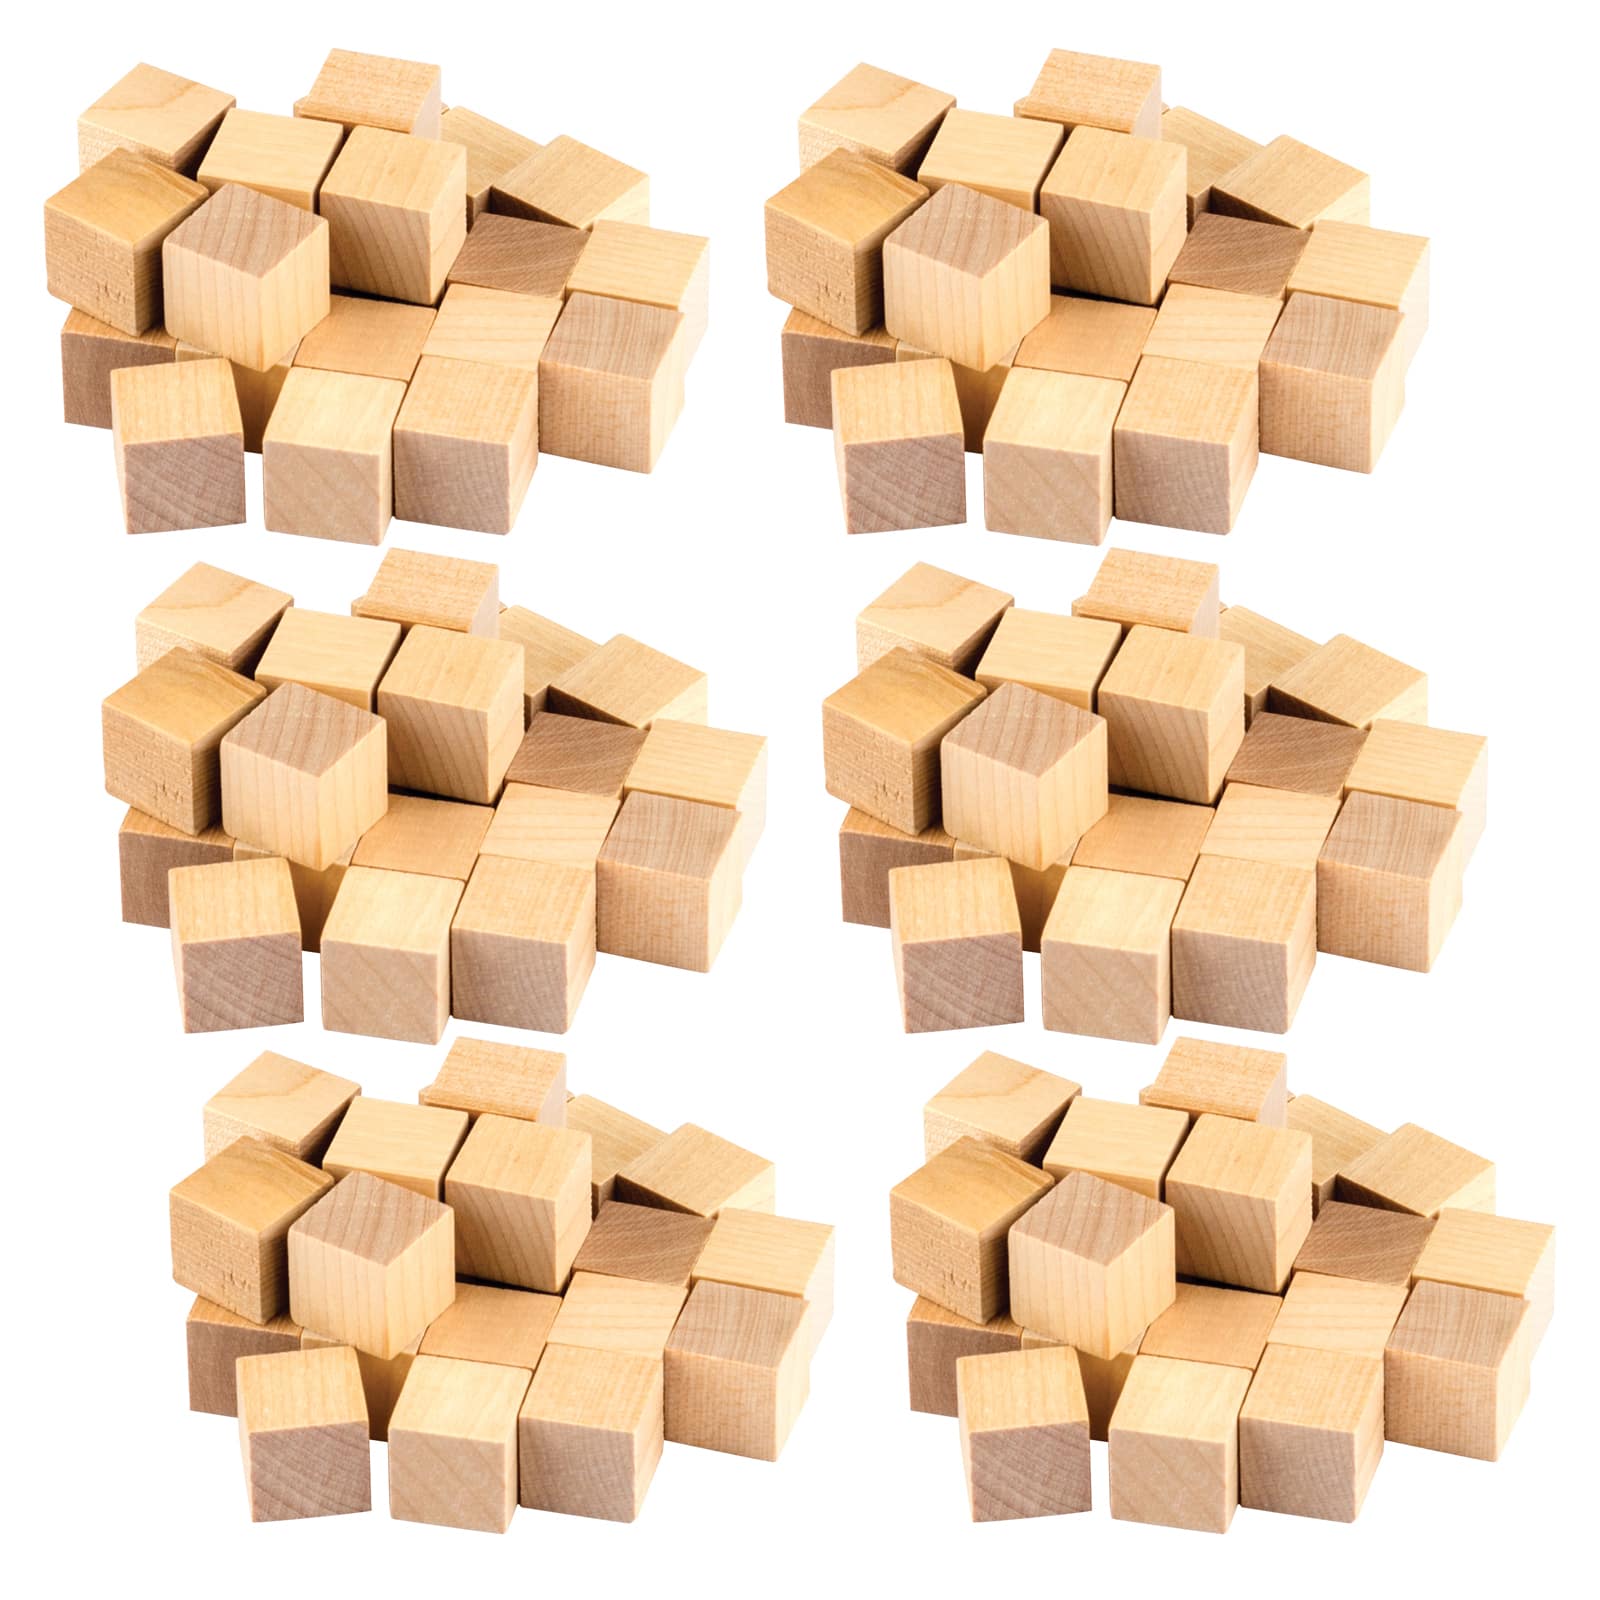 Teacher Created Resources STEM Basics Wooden Cubes, 6 packs of 25